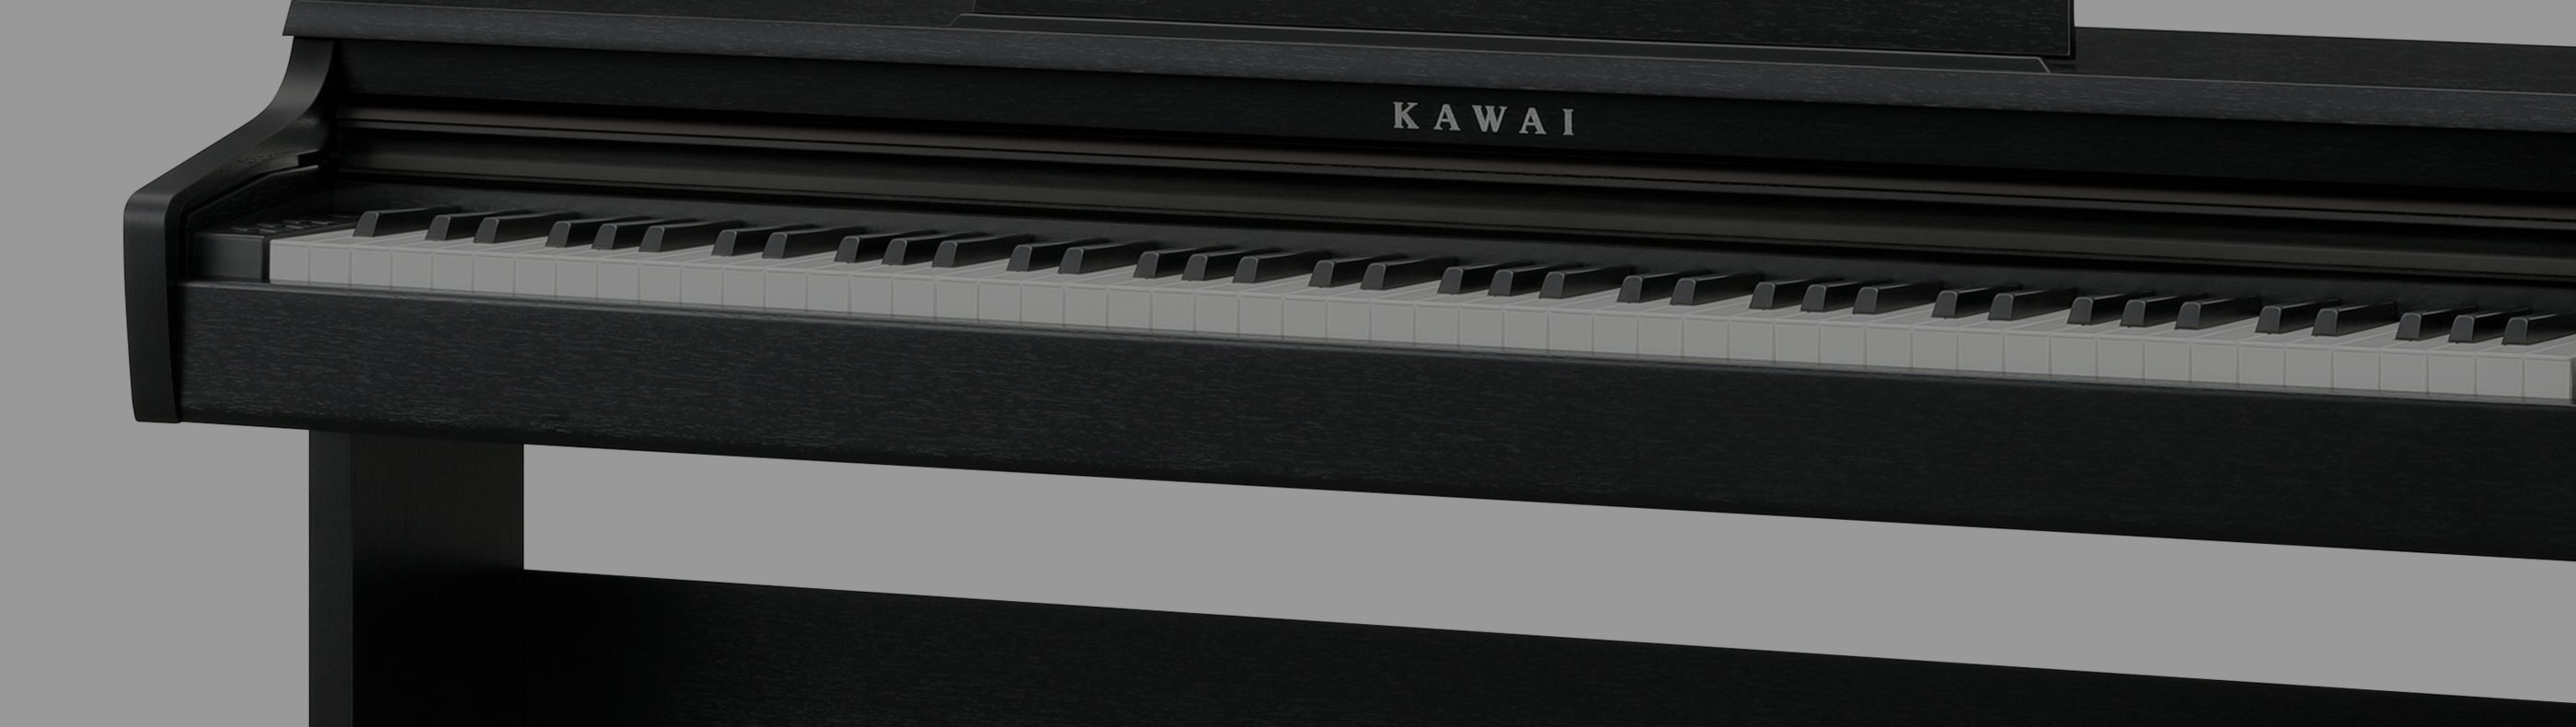 Kawai KDP120